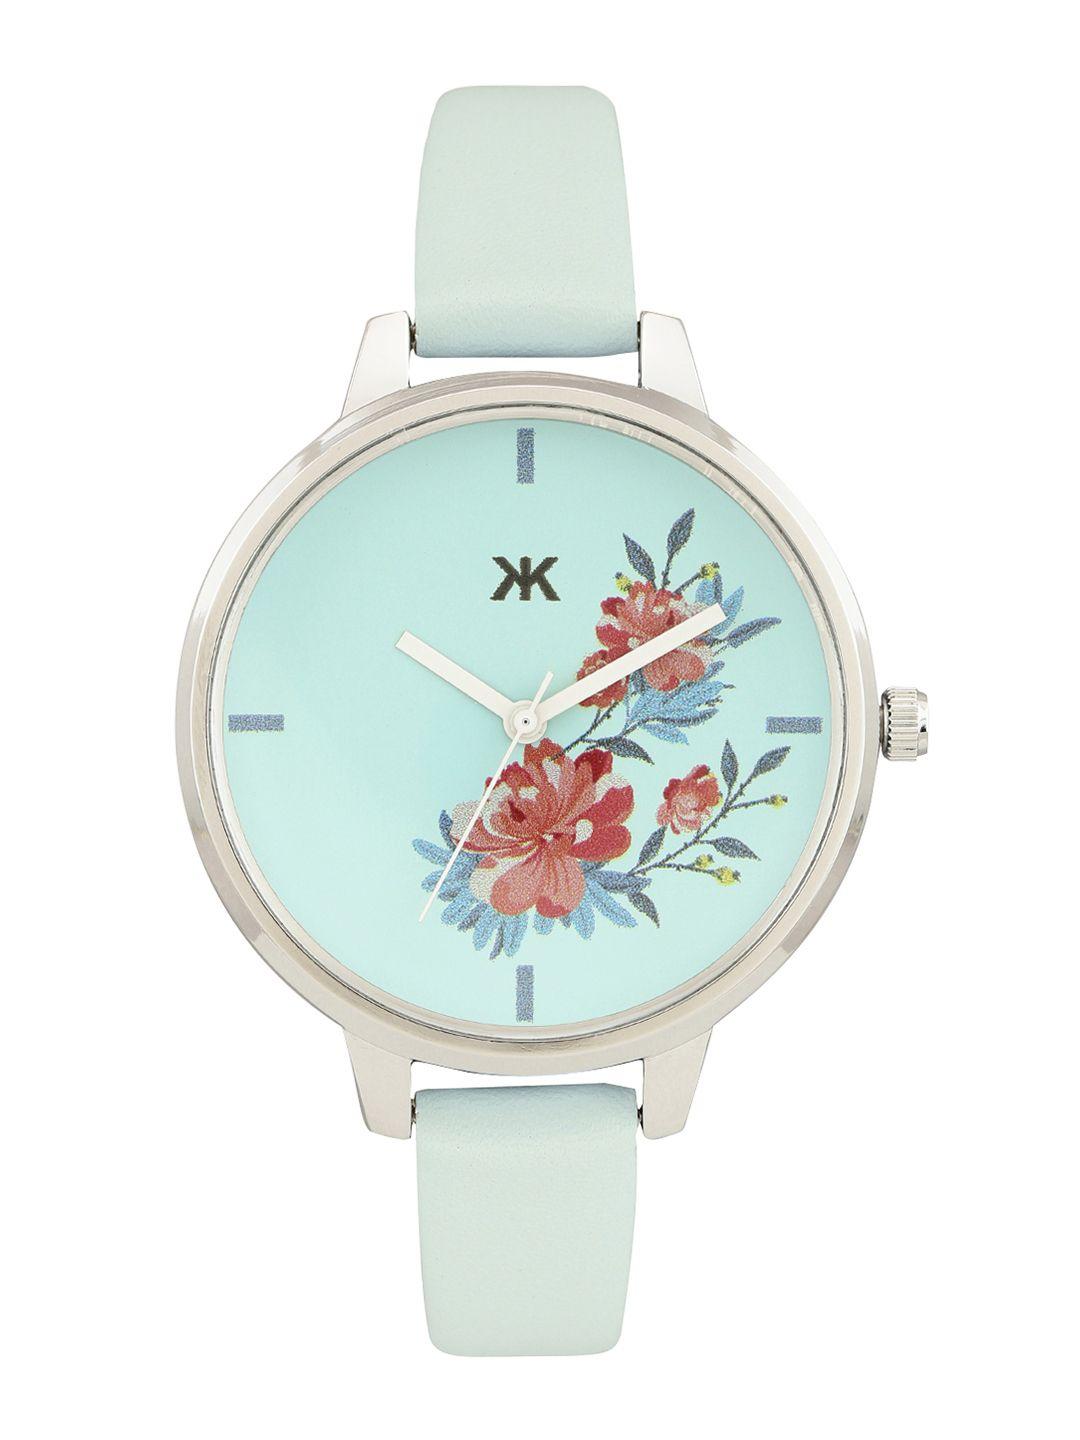 kook n keech women mint green printed analogue watch knk22-7c-blue